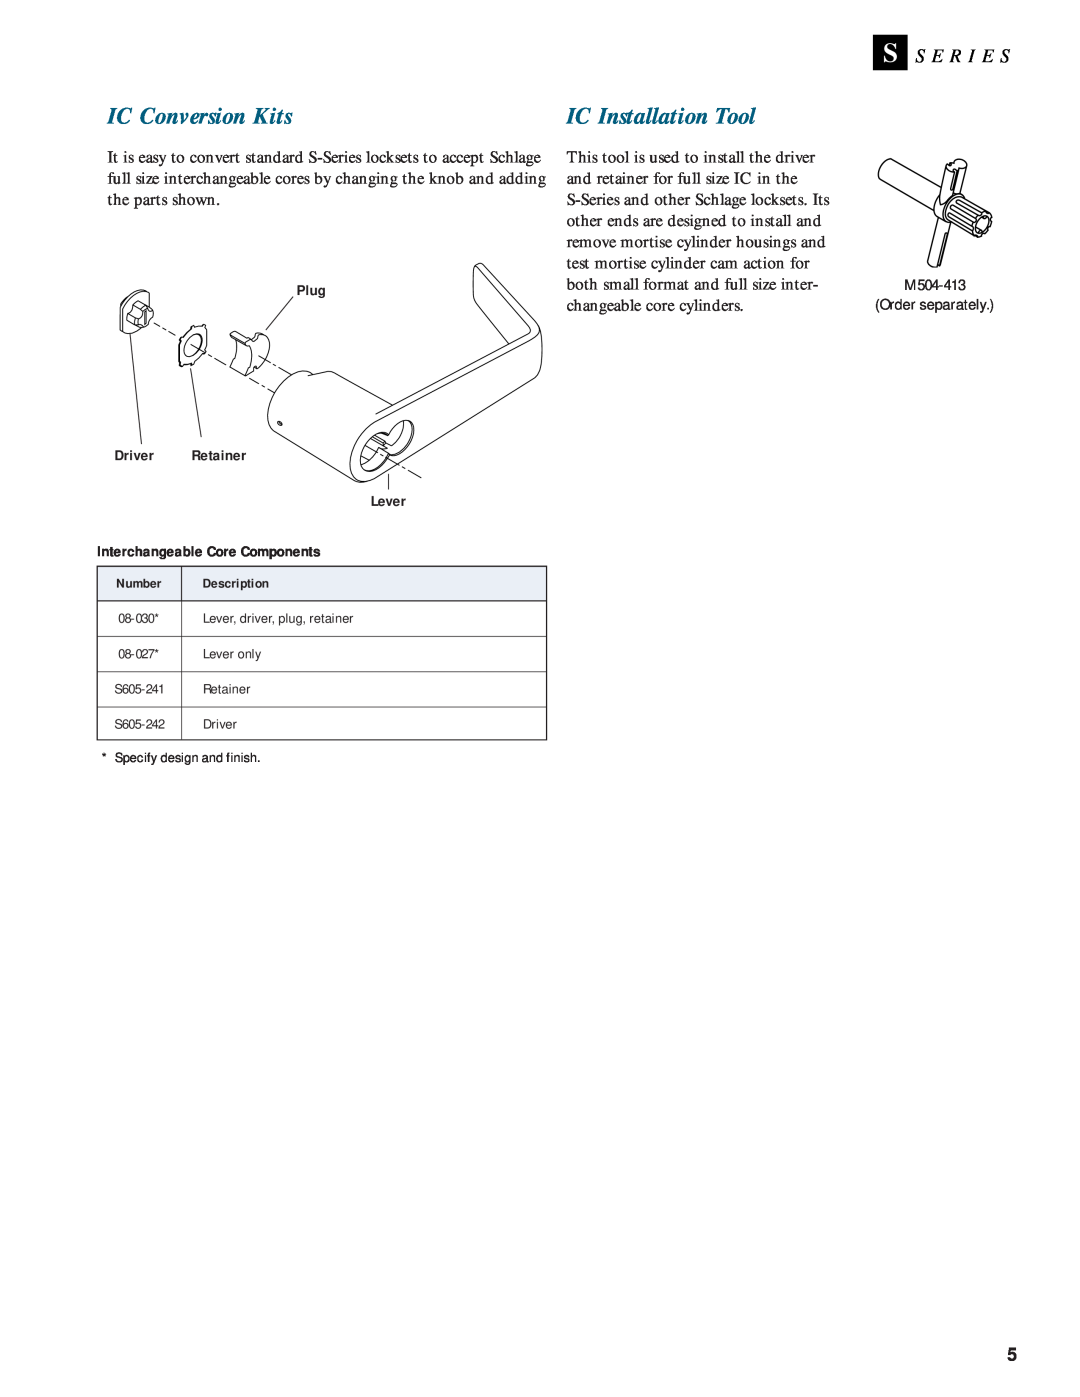 Schlage Door Locks manual IC Conversion Kits, IC Installation Tool, S S E R I E S 